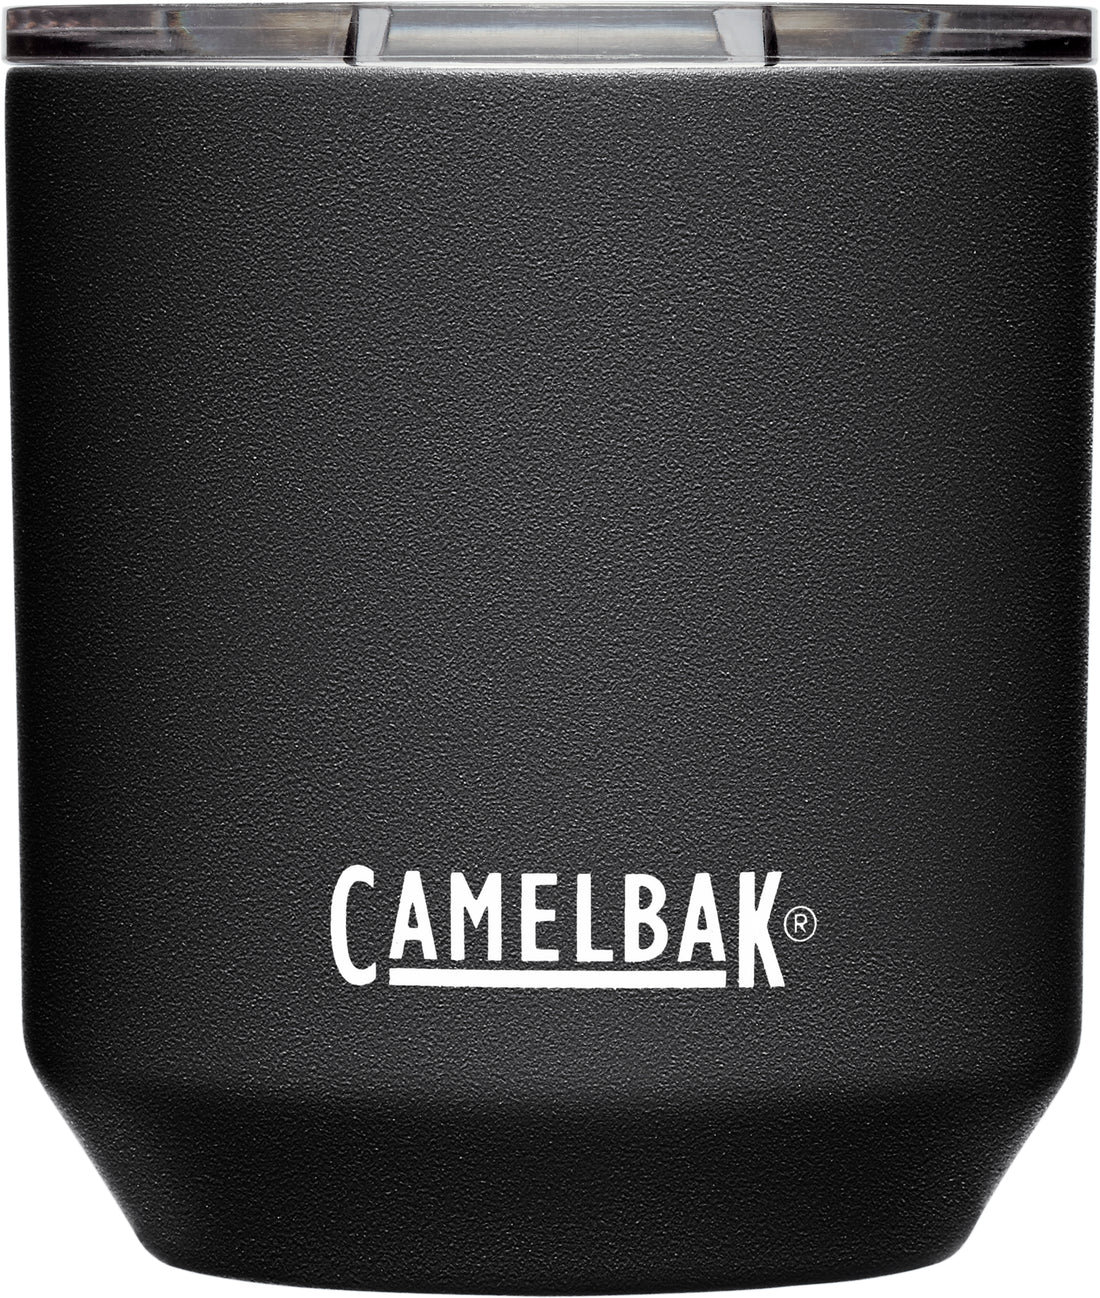 Camelbak|ROCKS_TUMBLER|Cycle_LM